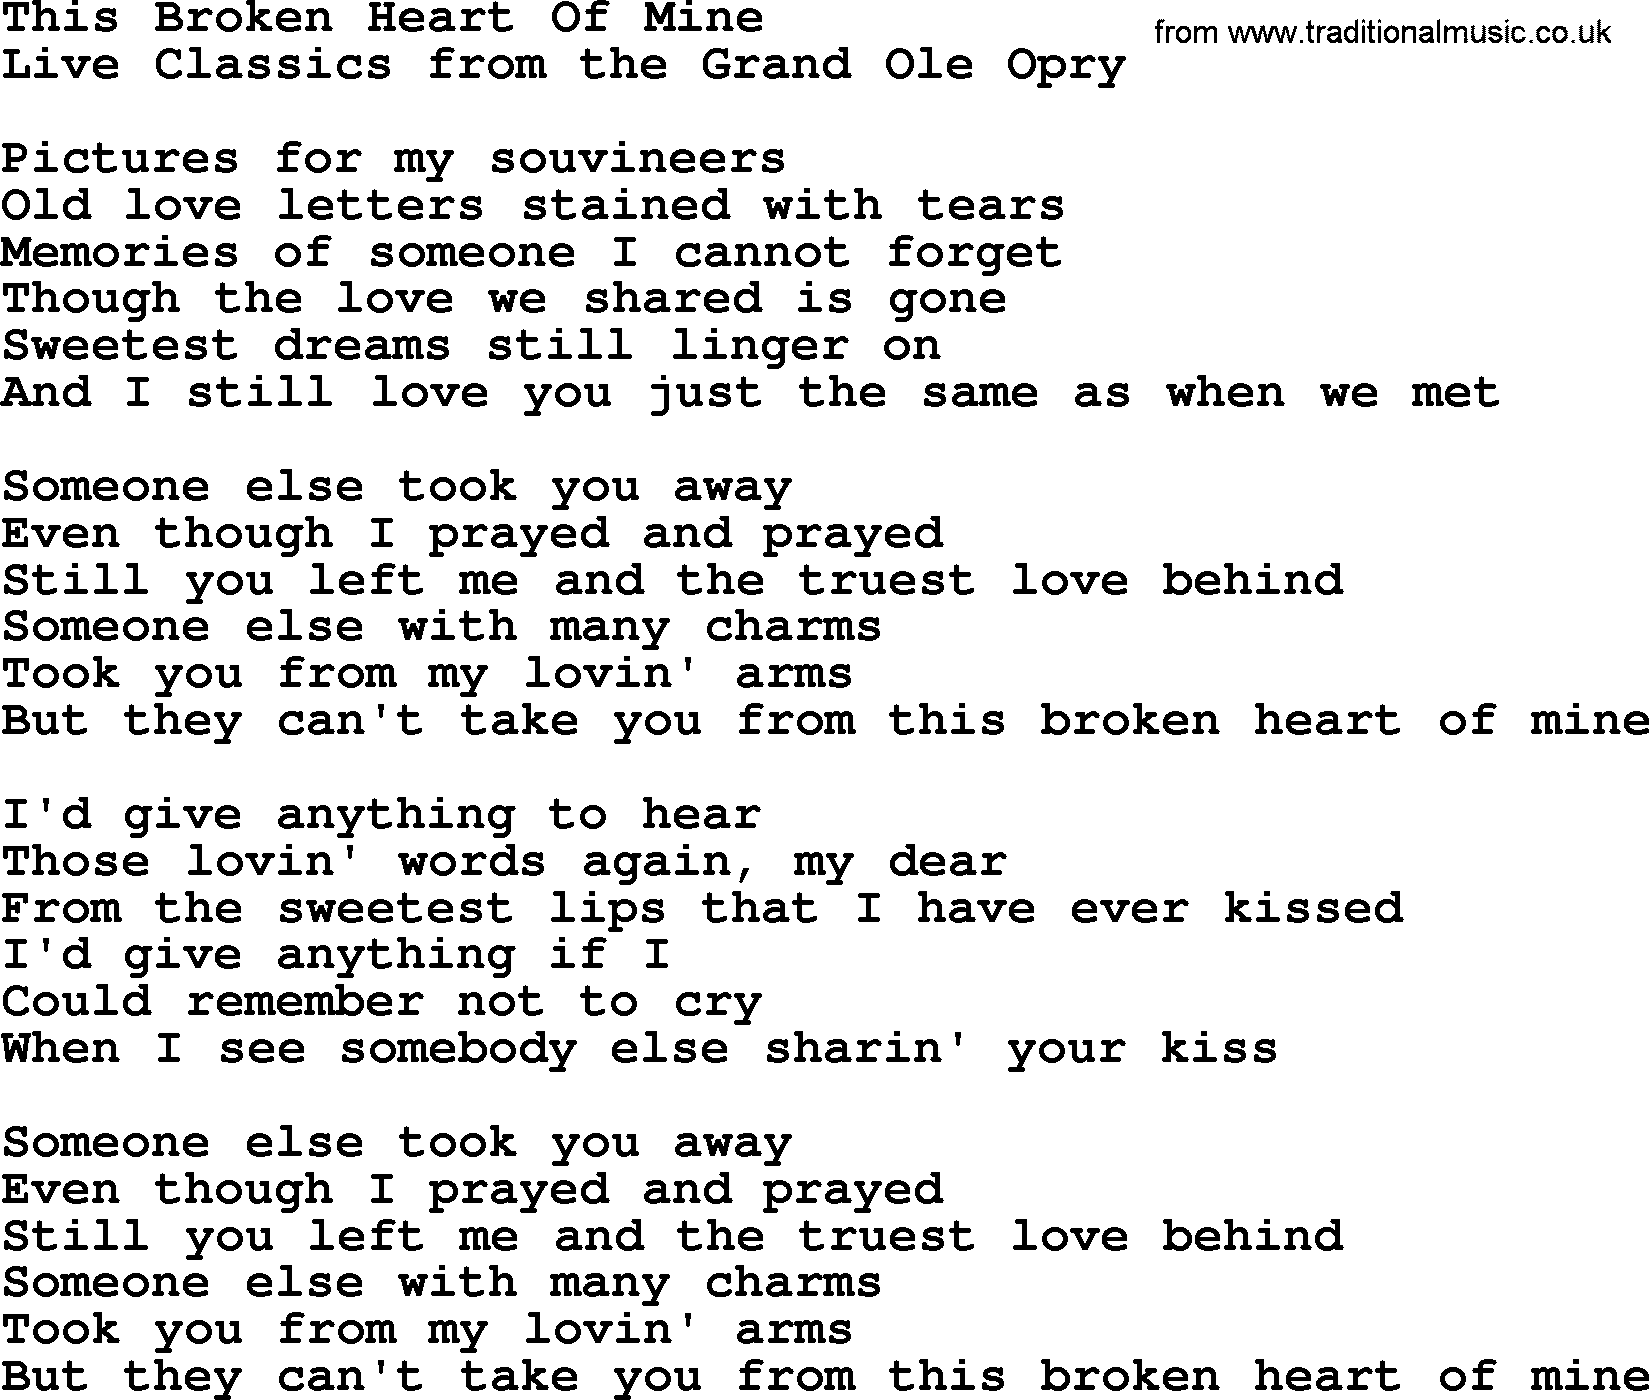 Marty Robbins song: This Broken Heart Of Mine, lyrics